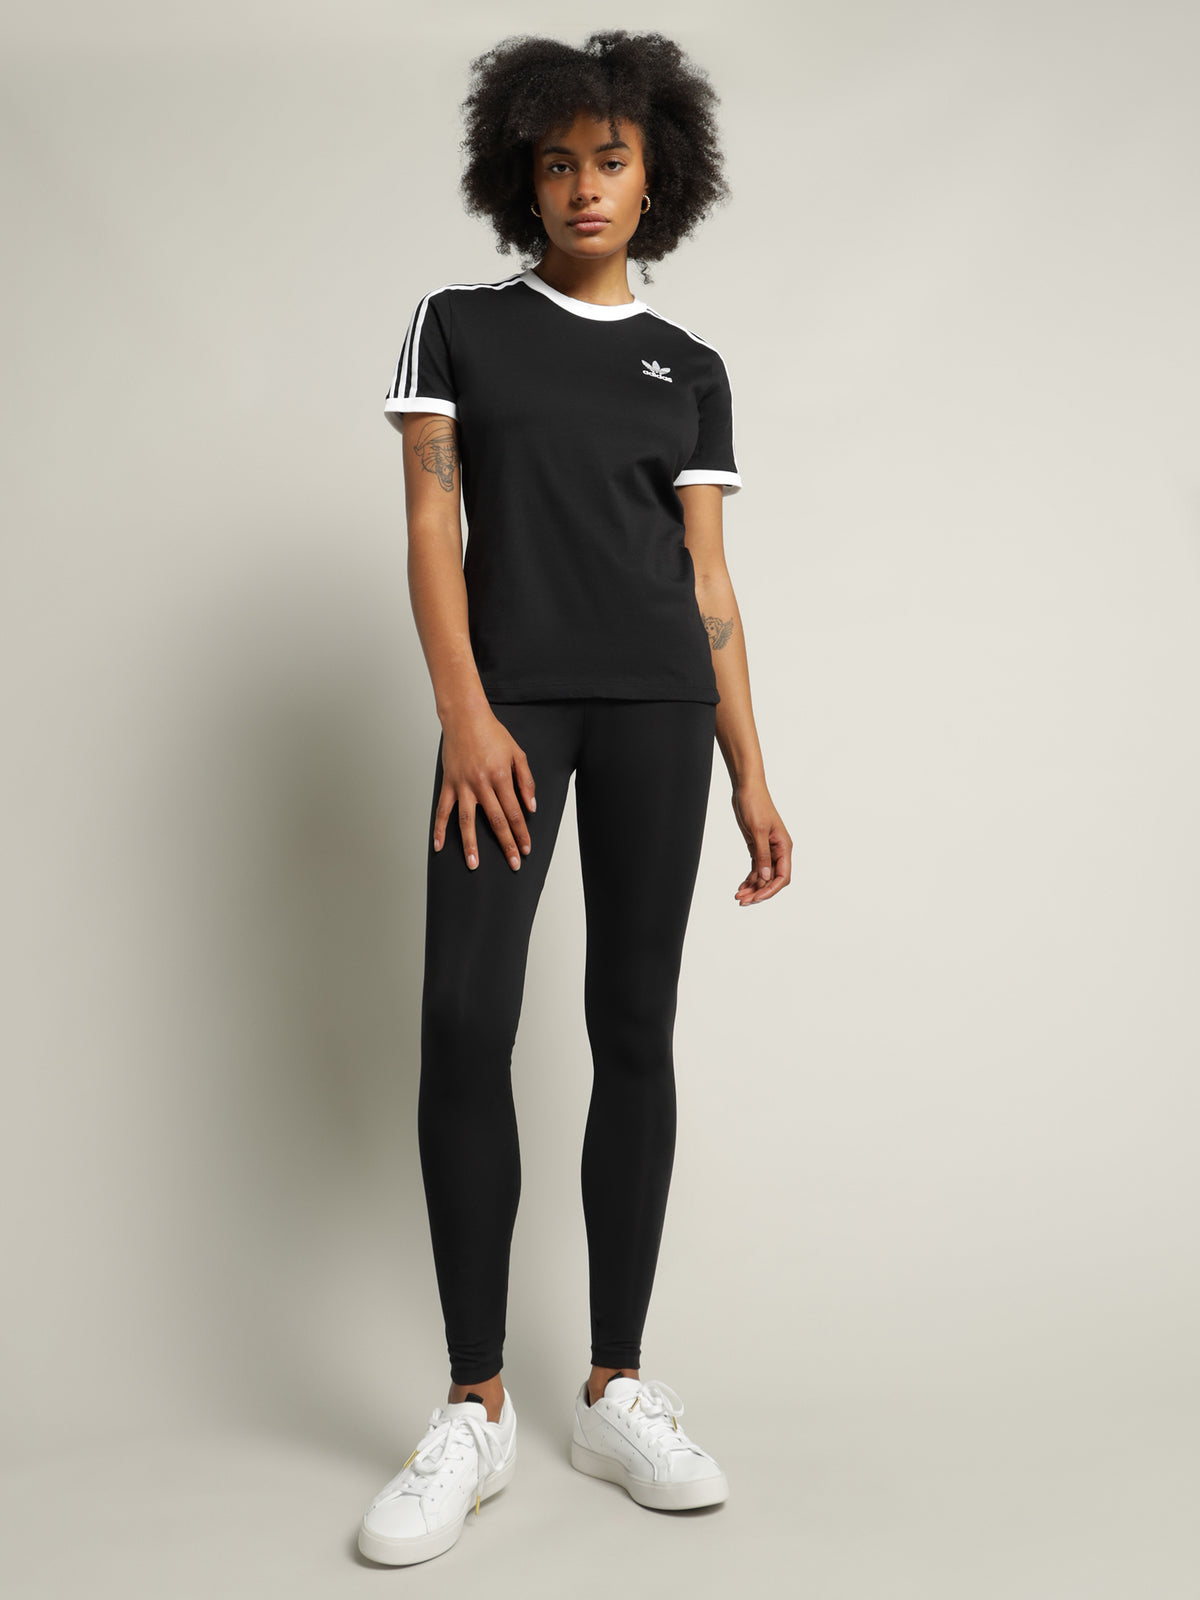 Adicolor Classics 3-Stripes T-Shirt in Black